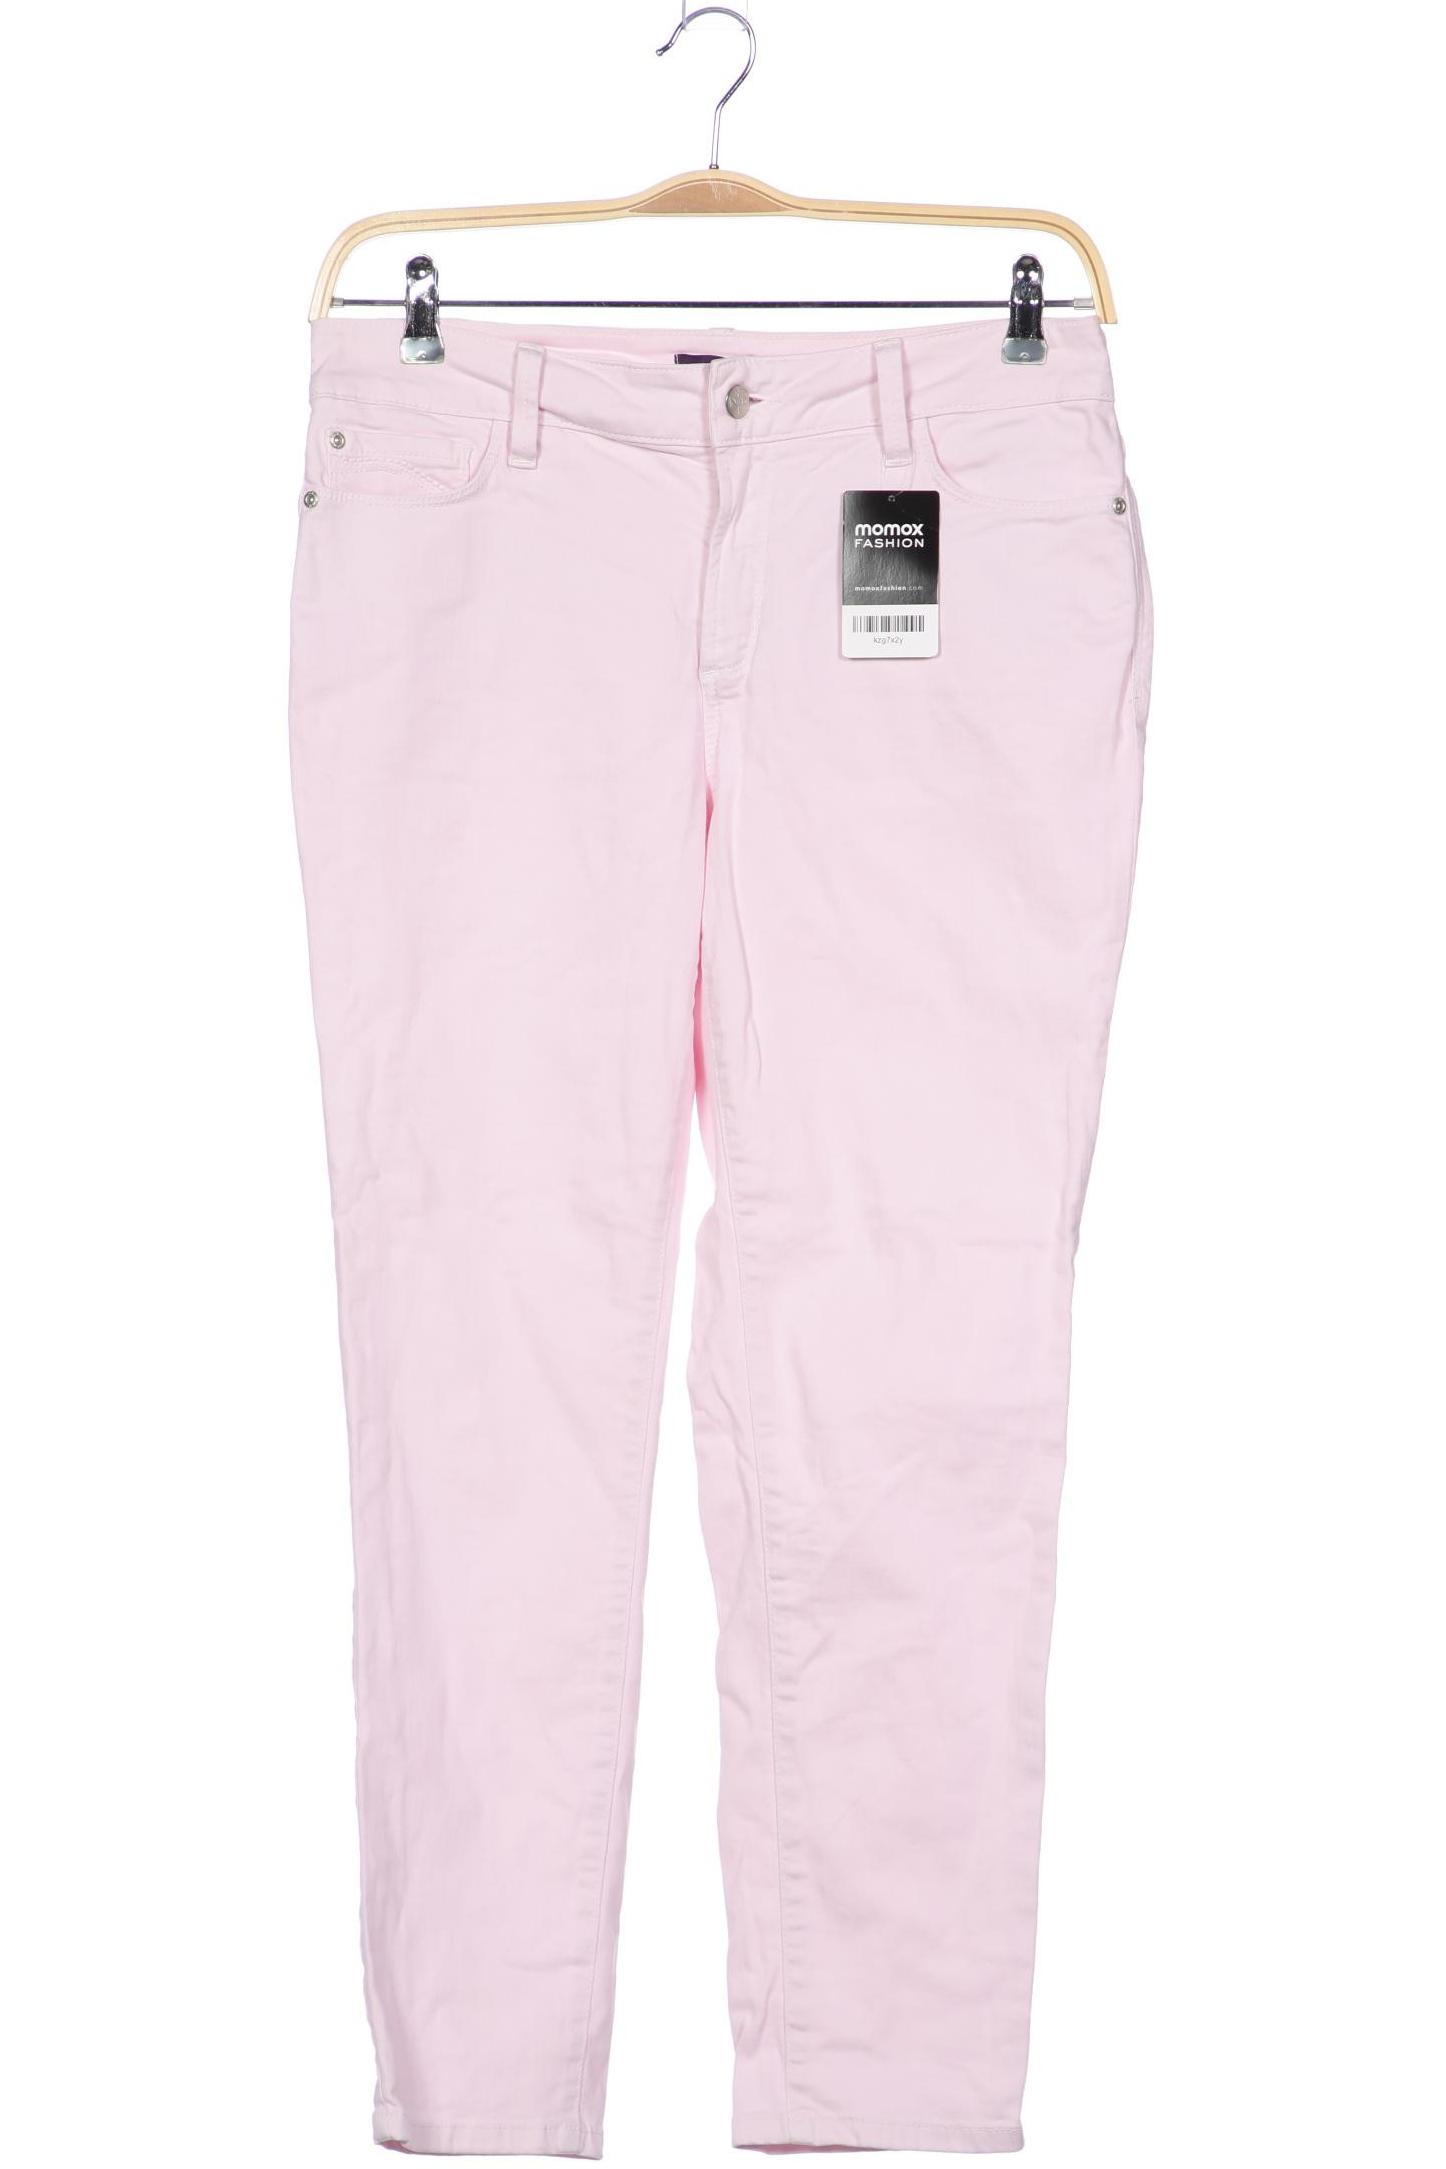 NYDJ Damen Jeans, pink von Nydj